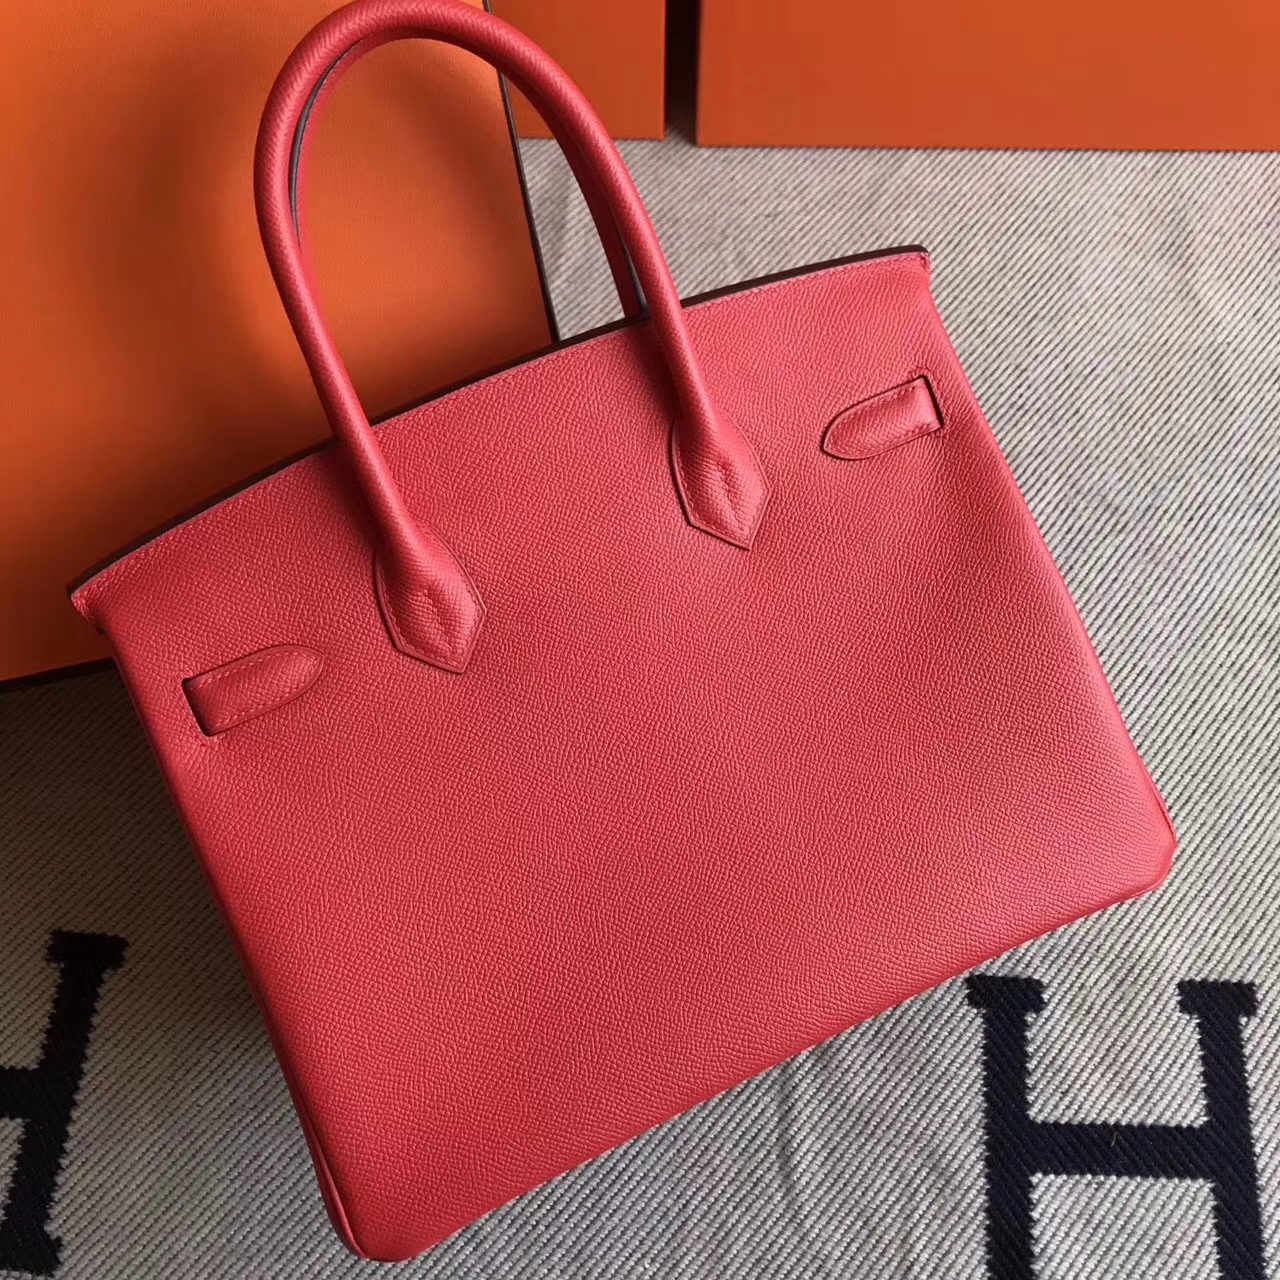 New Pretty Hermes Epsom Leather Birkin30cm Bag in T5 Peach Pink